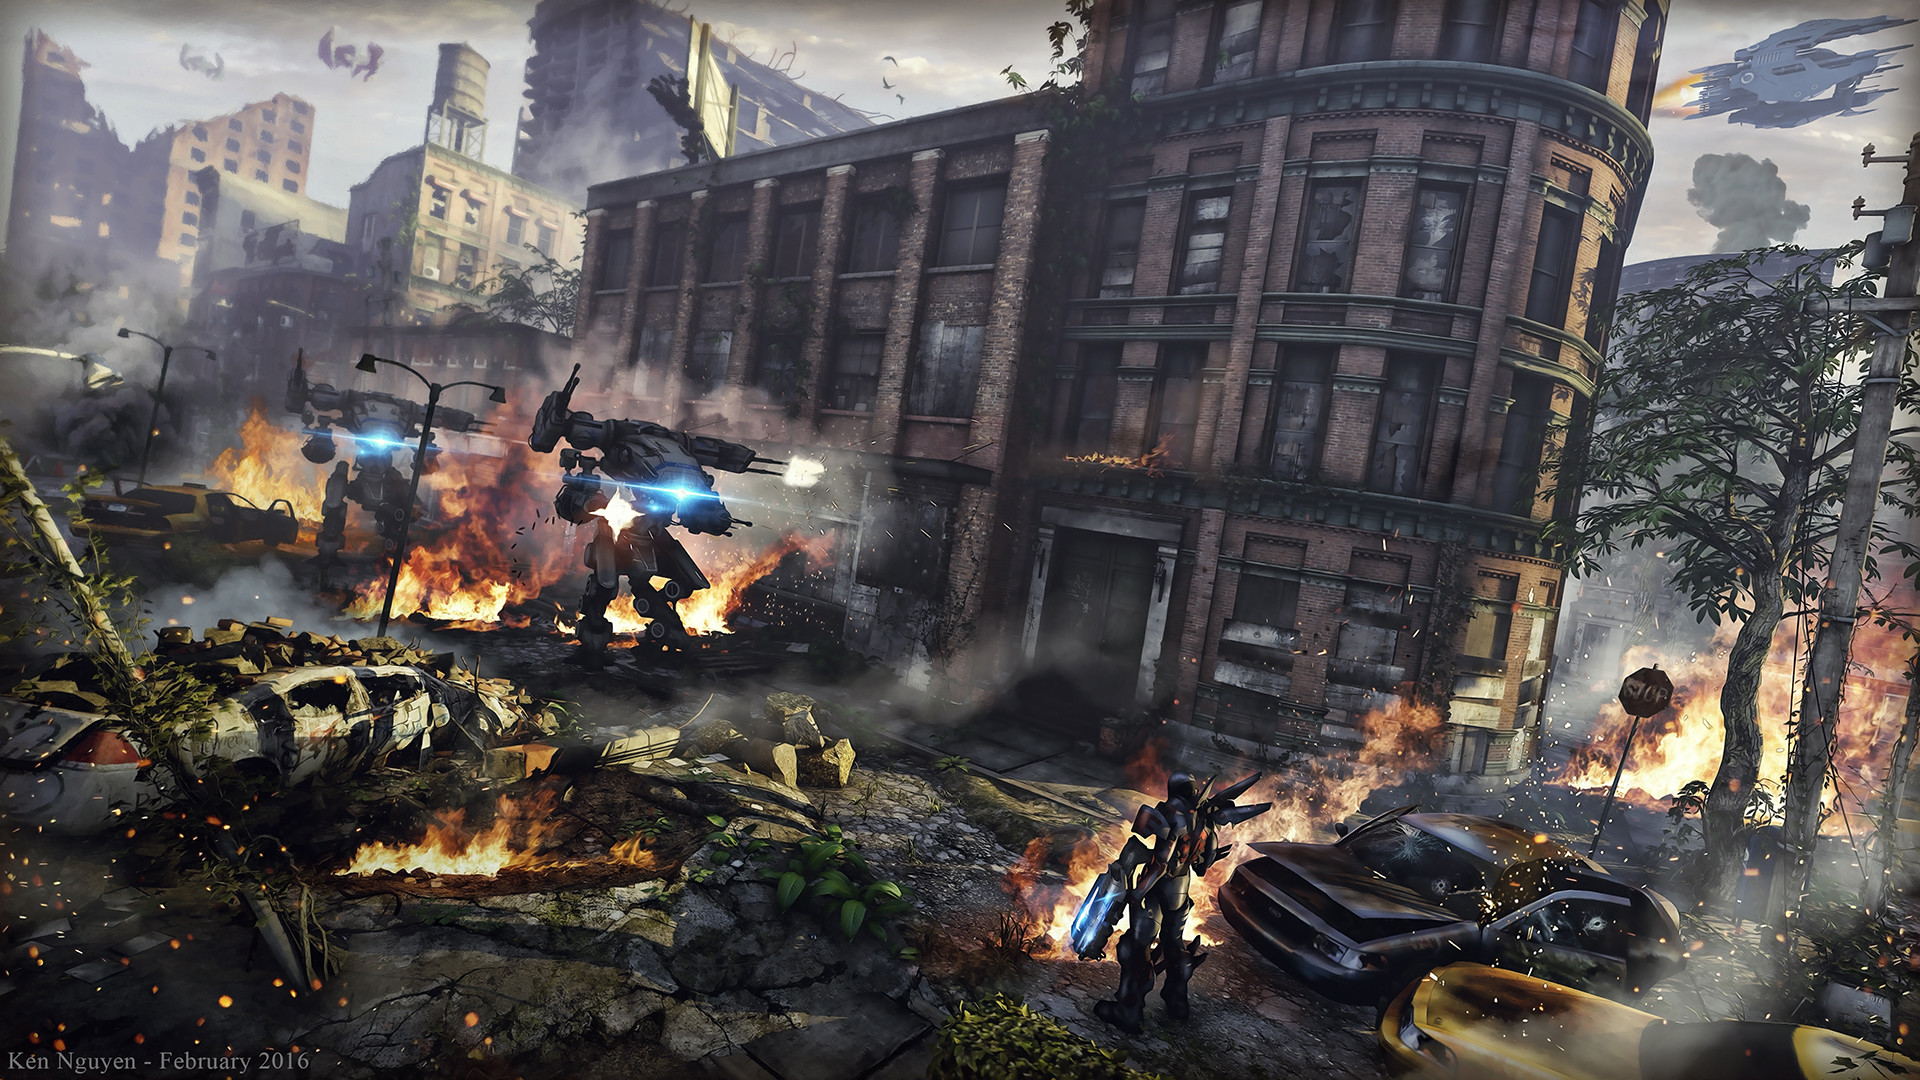 General 1920x1080 science fiction high tech aliens fire city debris ruins humanoid battlesuit drone smoke